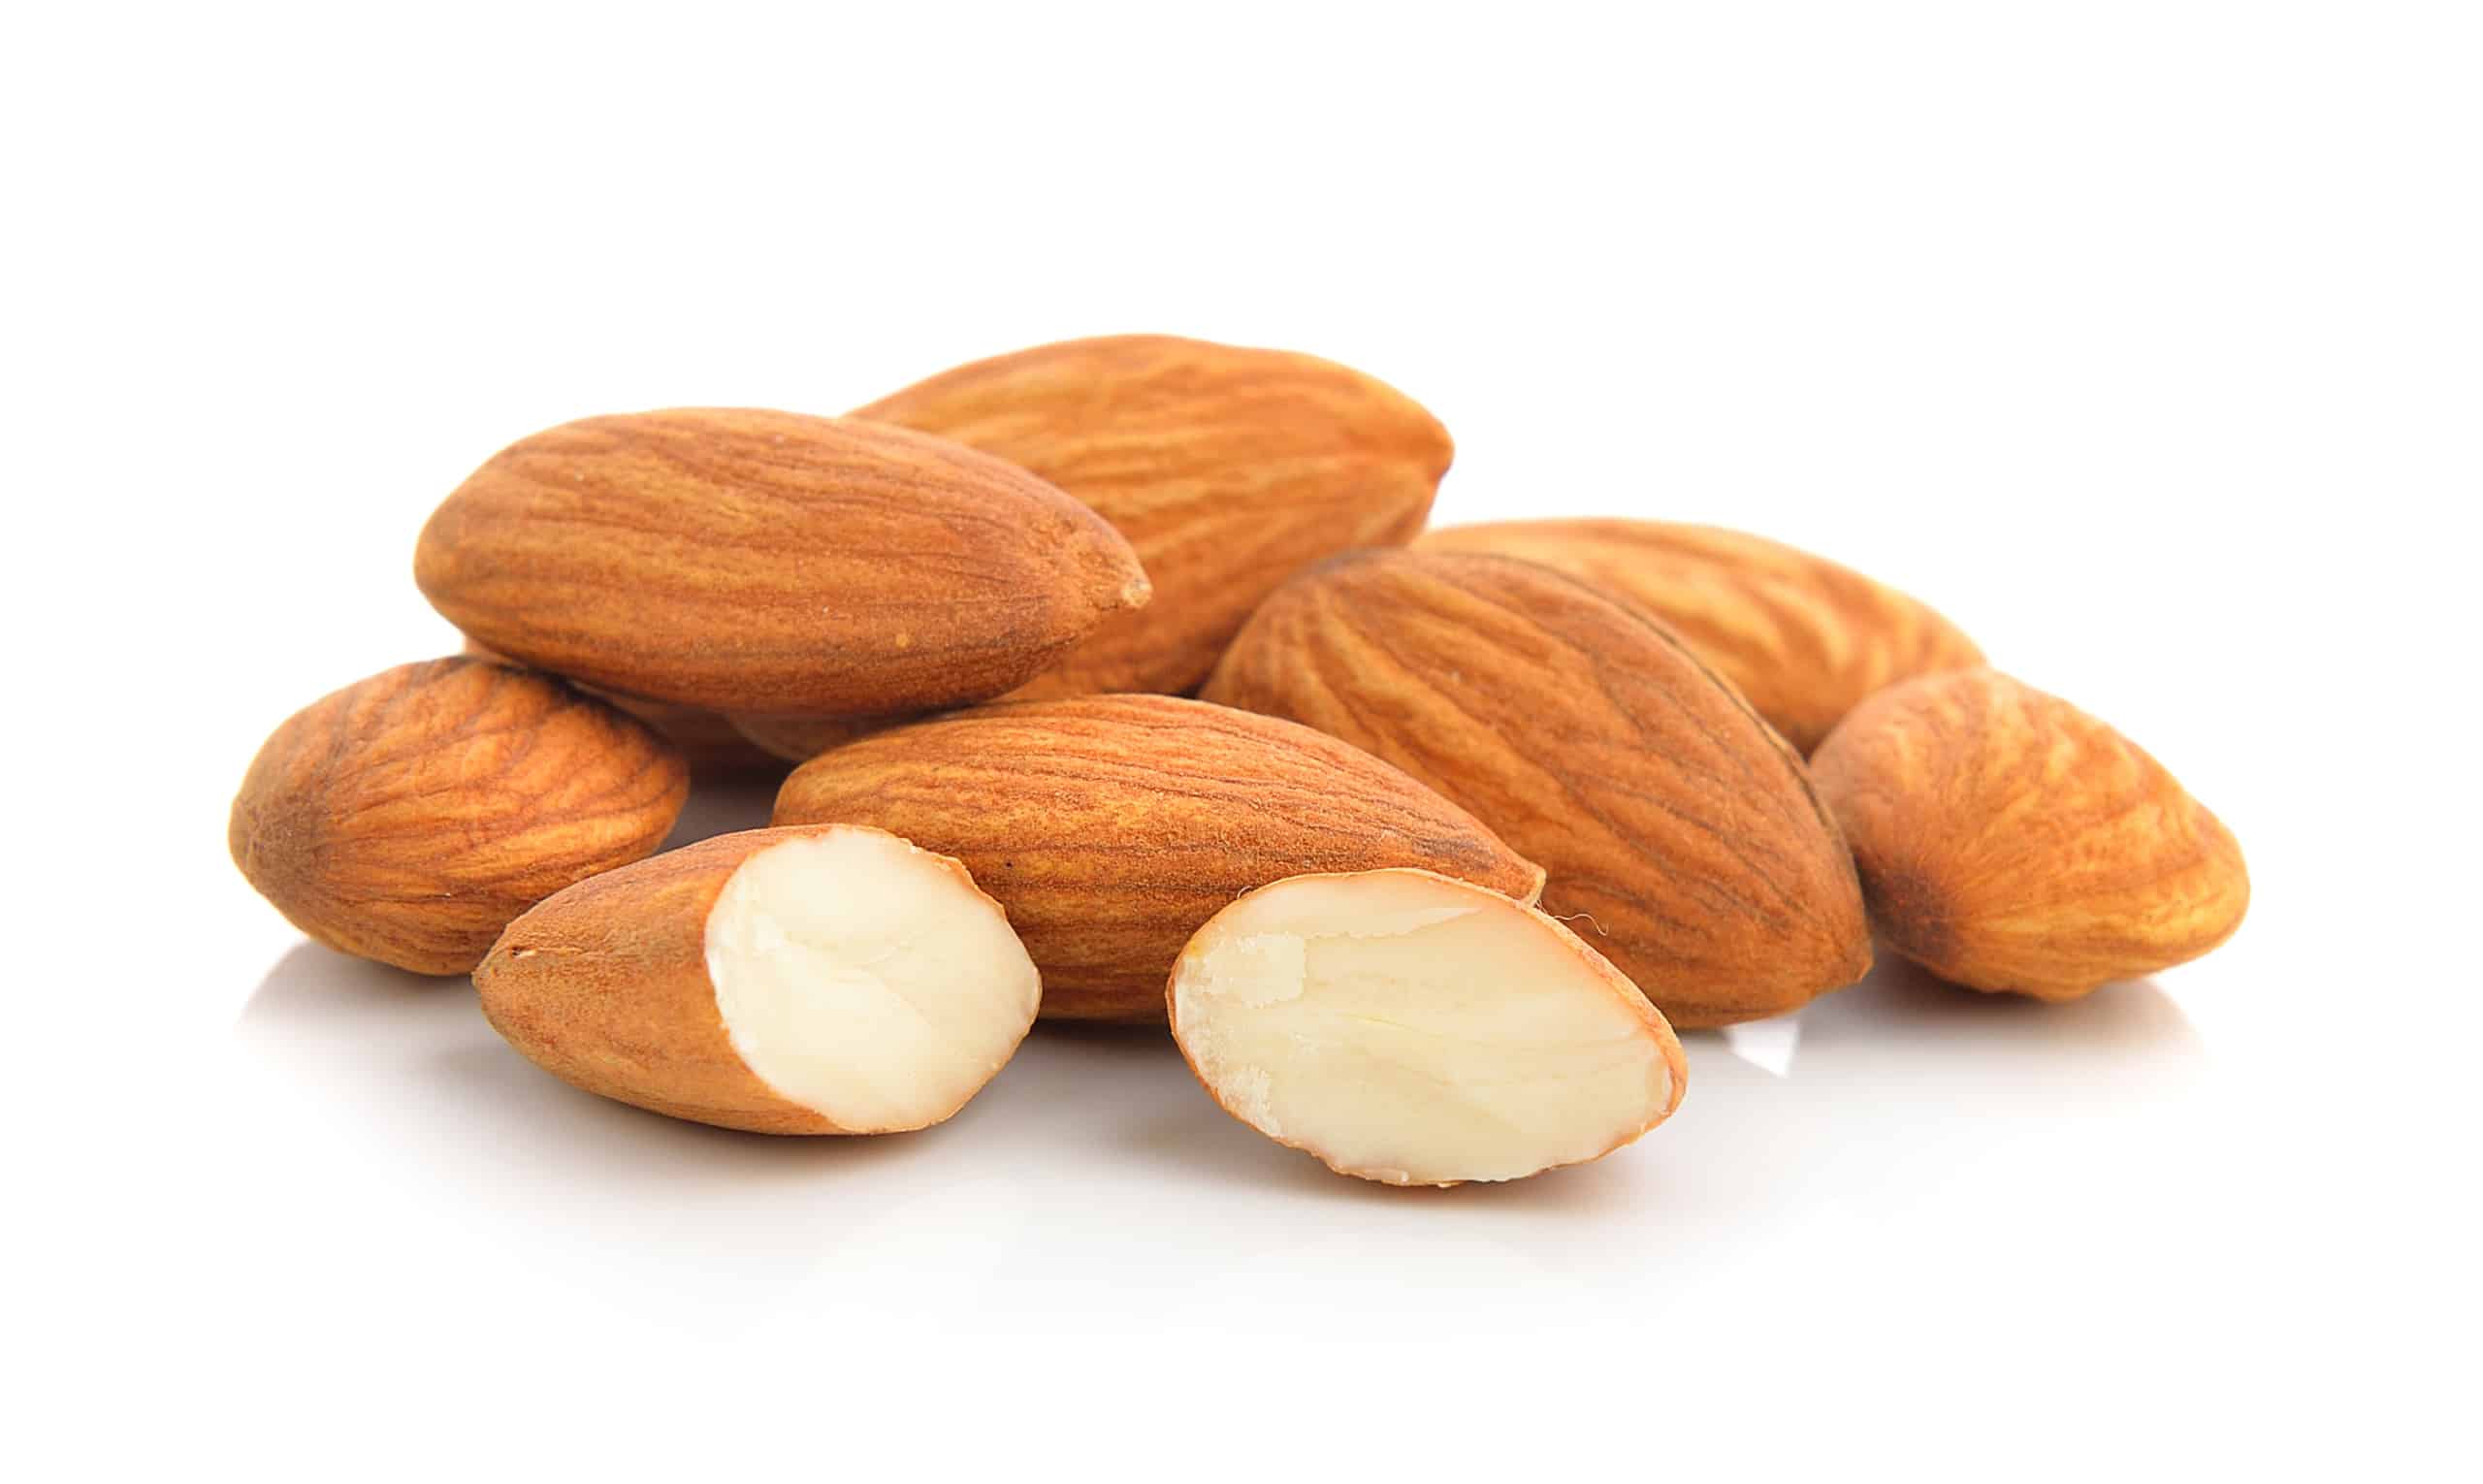 Benefits of Raw Almonds